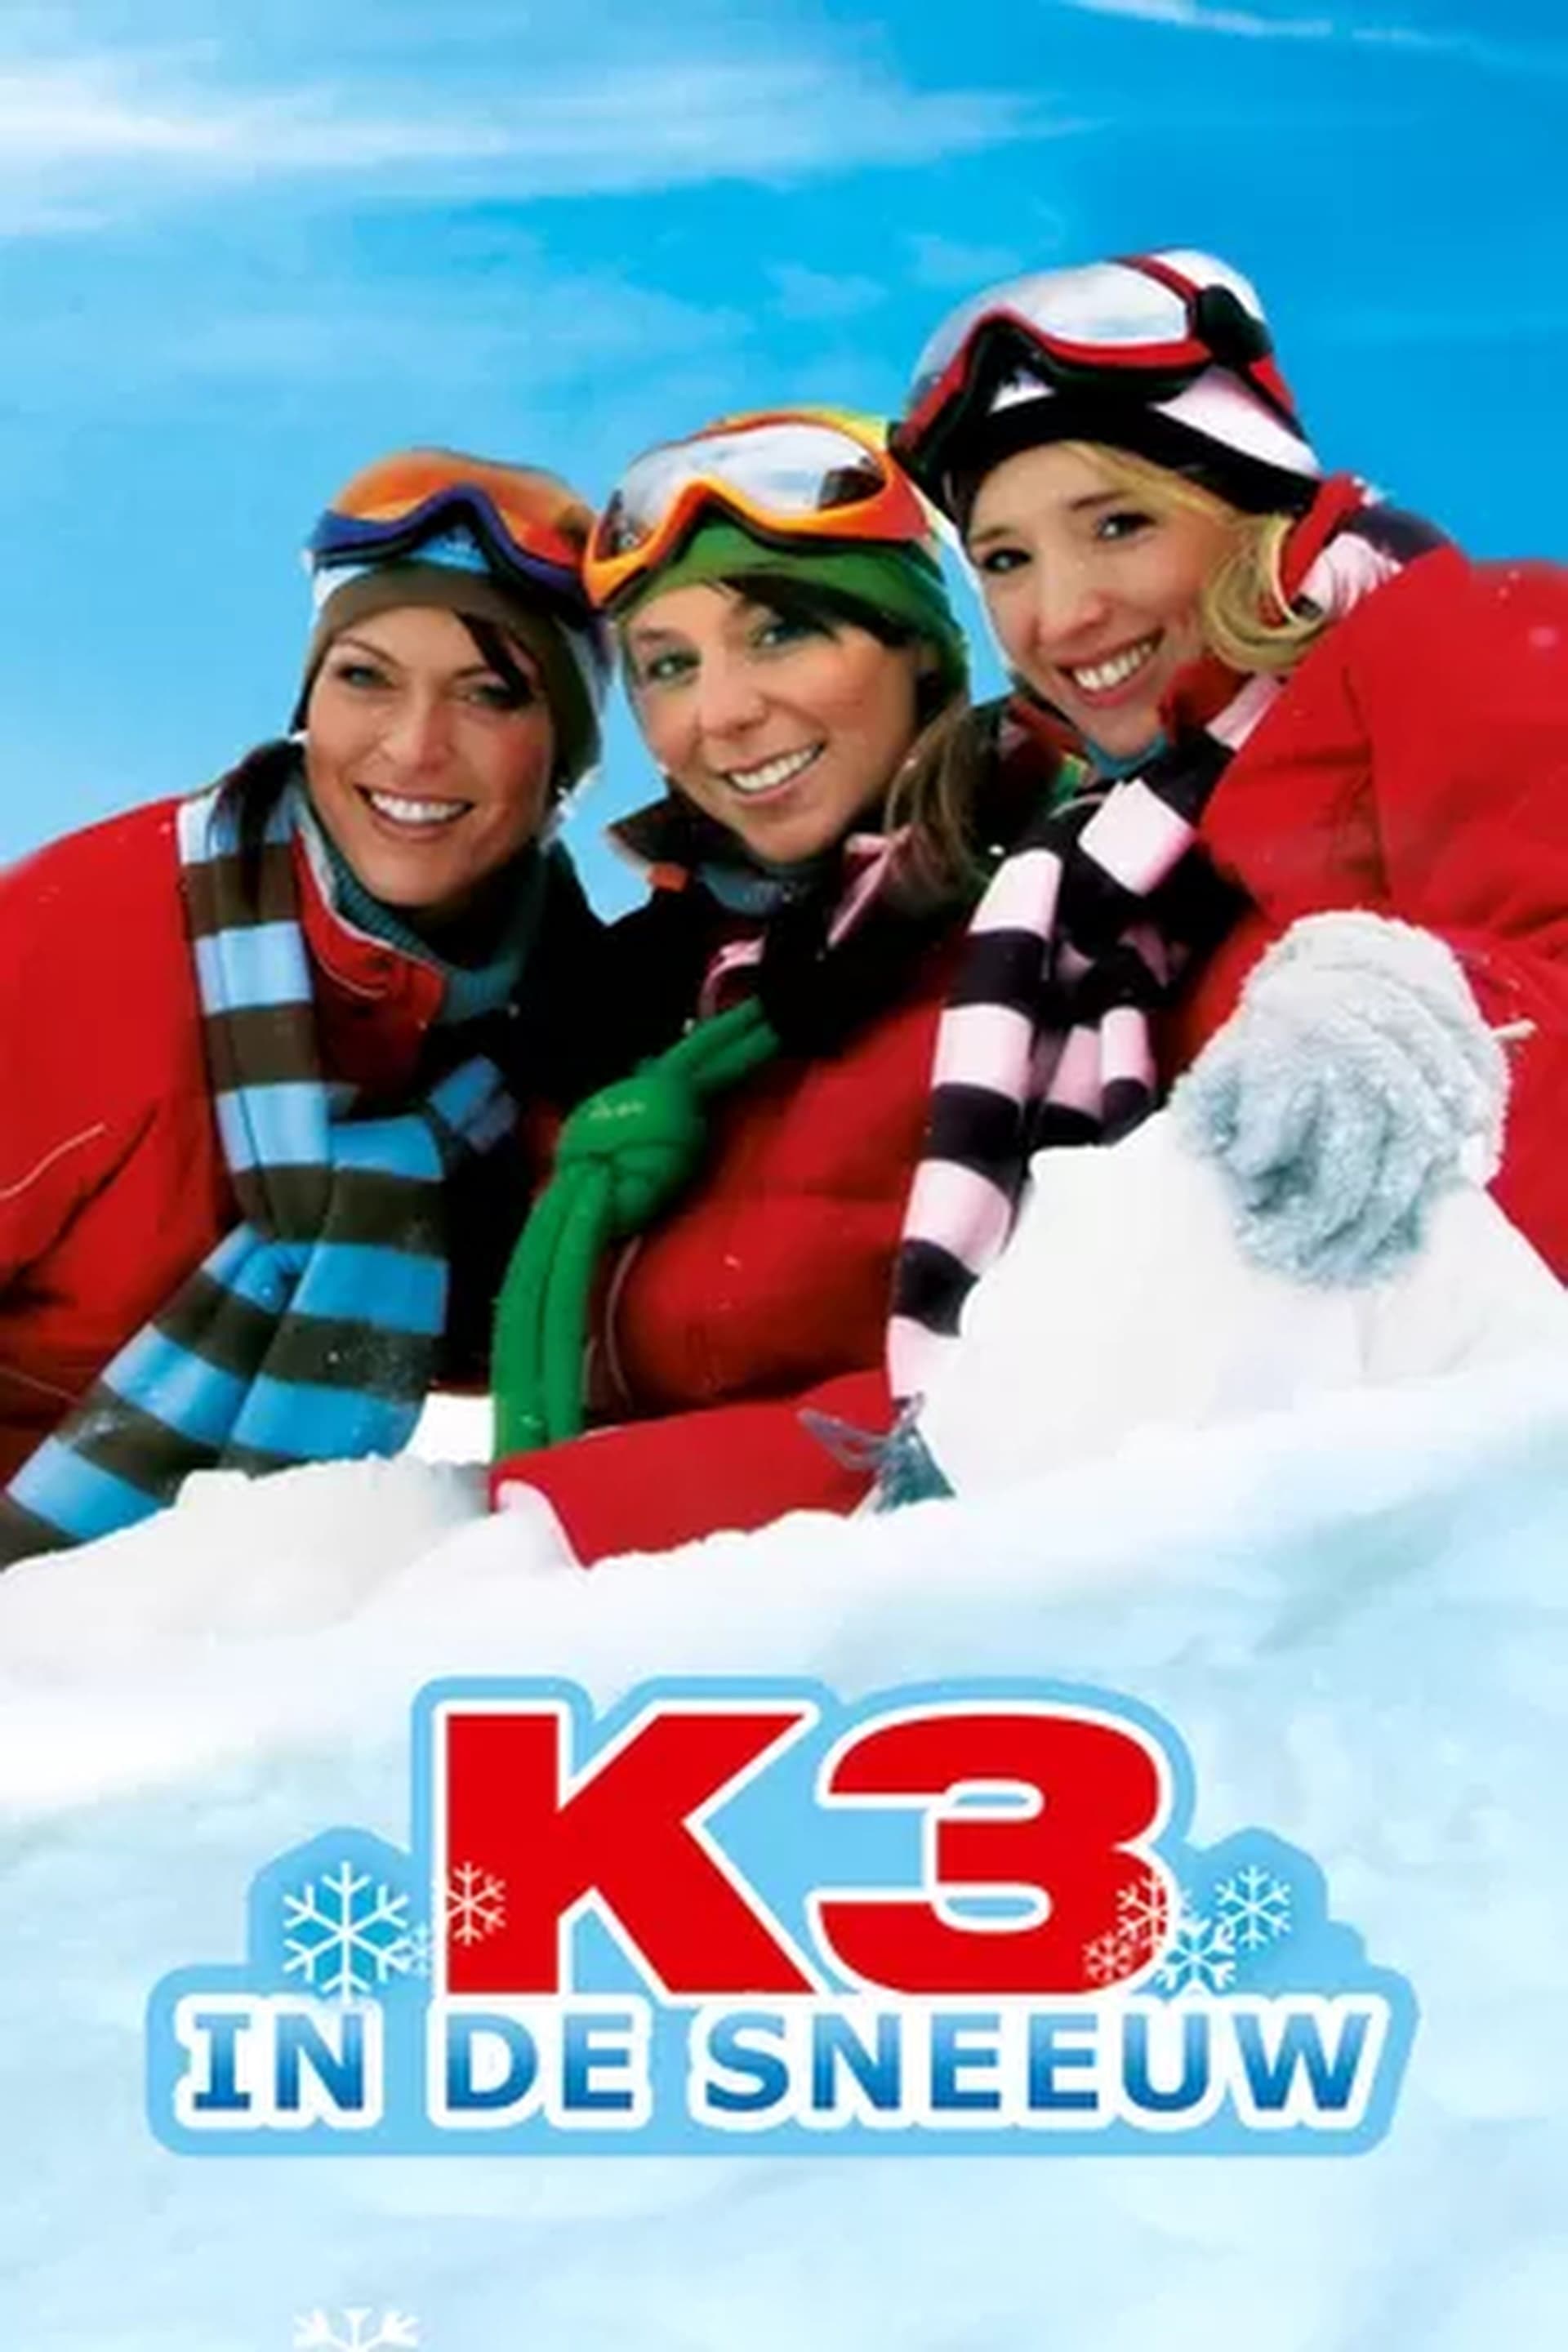 K3 in de Sneeuw